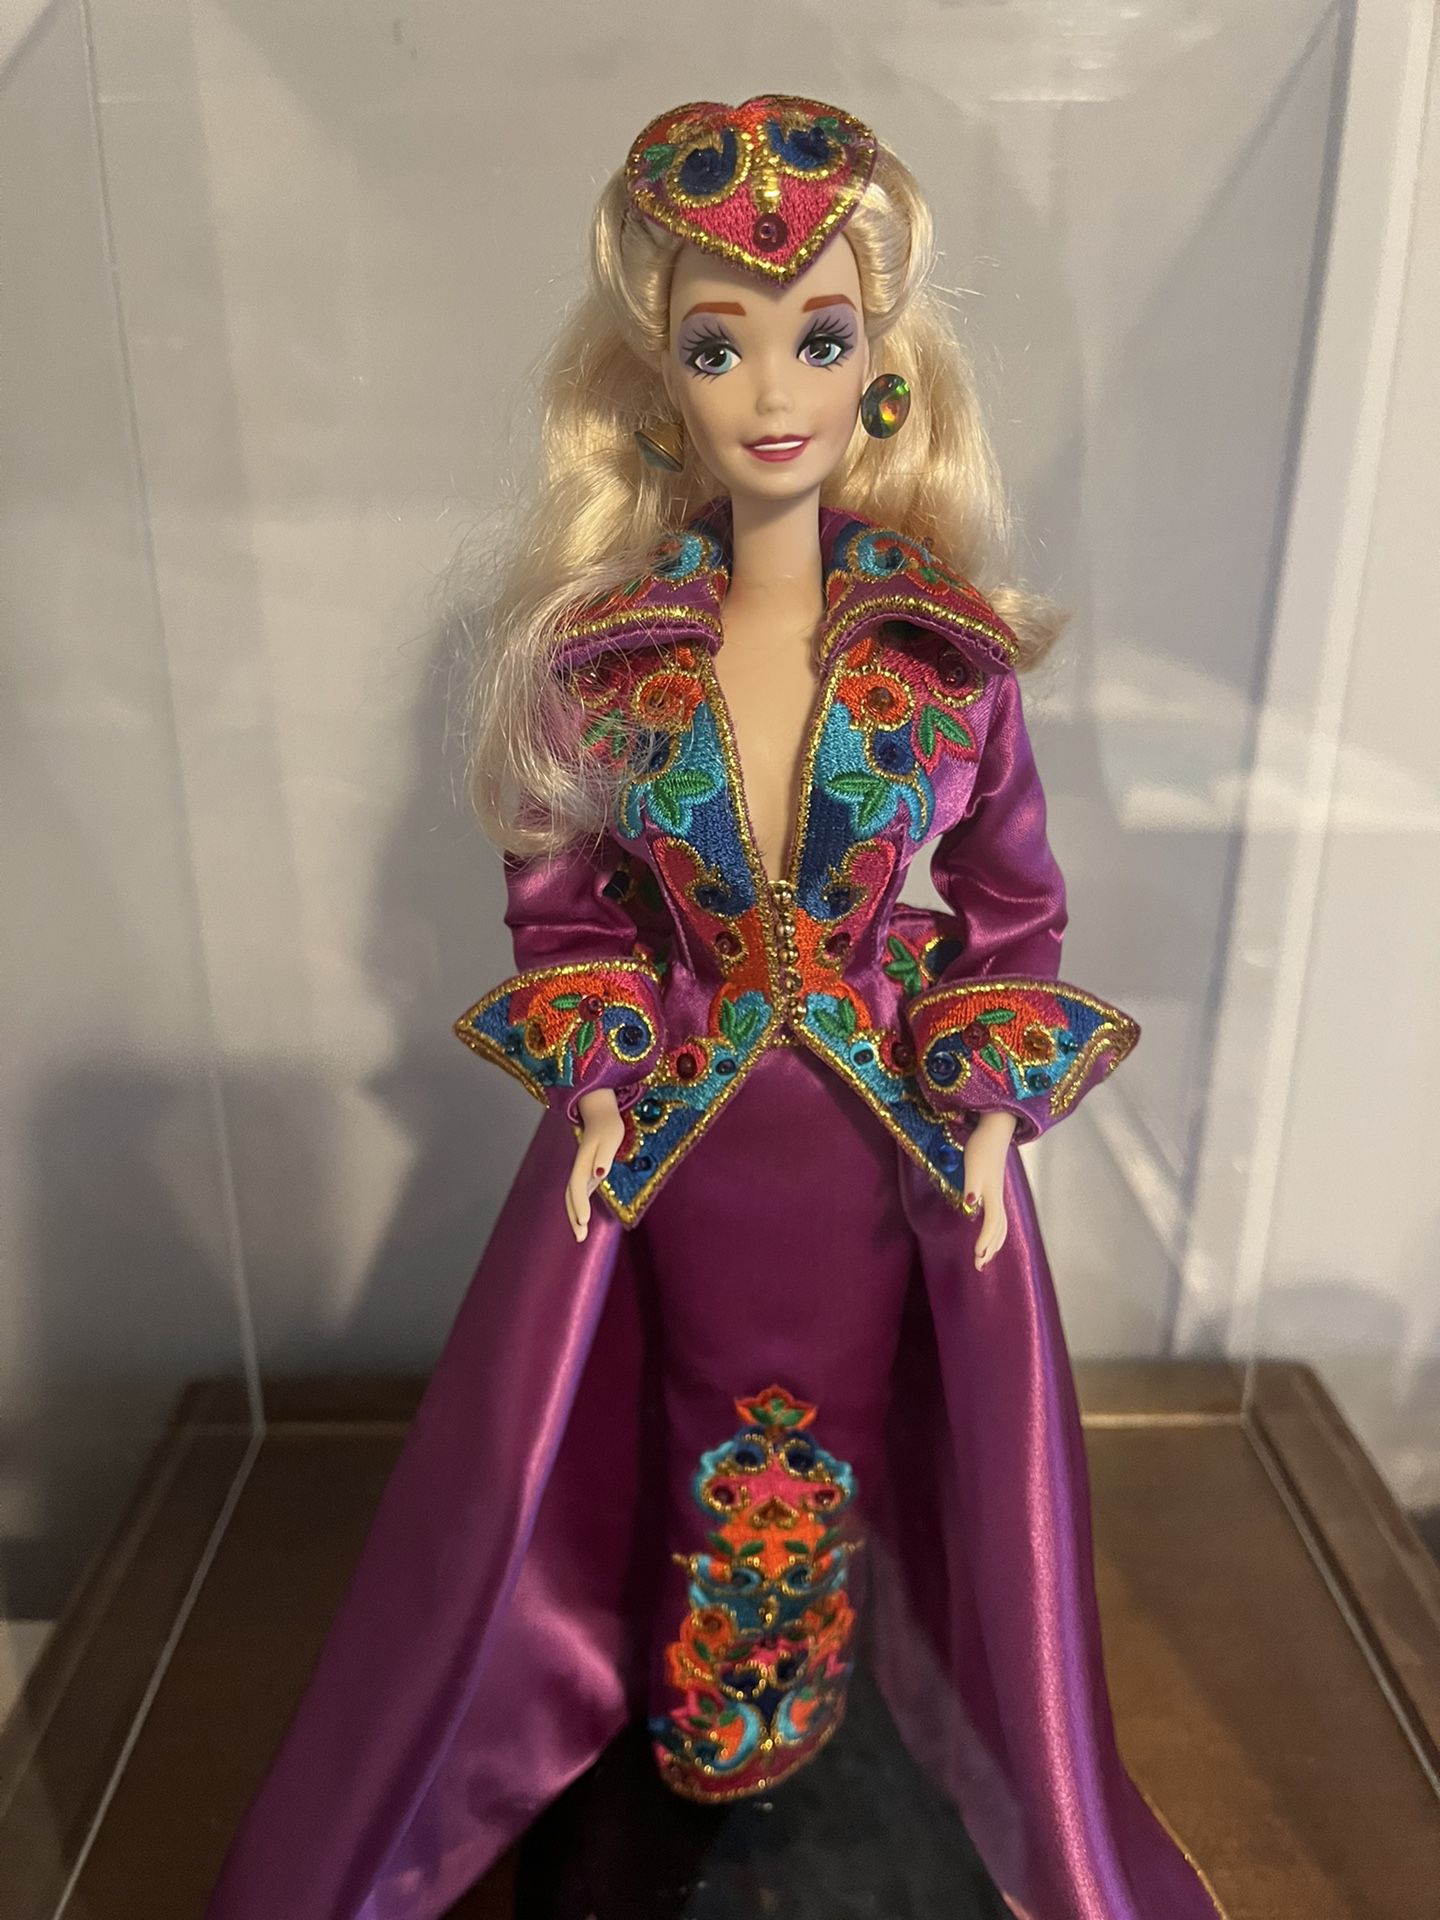 Royal Splendor Bob Mackie Porcelain Barbie for Sale in Seymour, CT - OfferUp